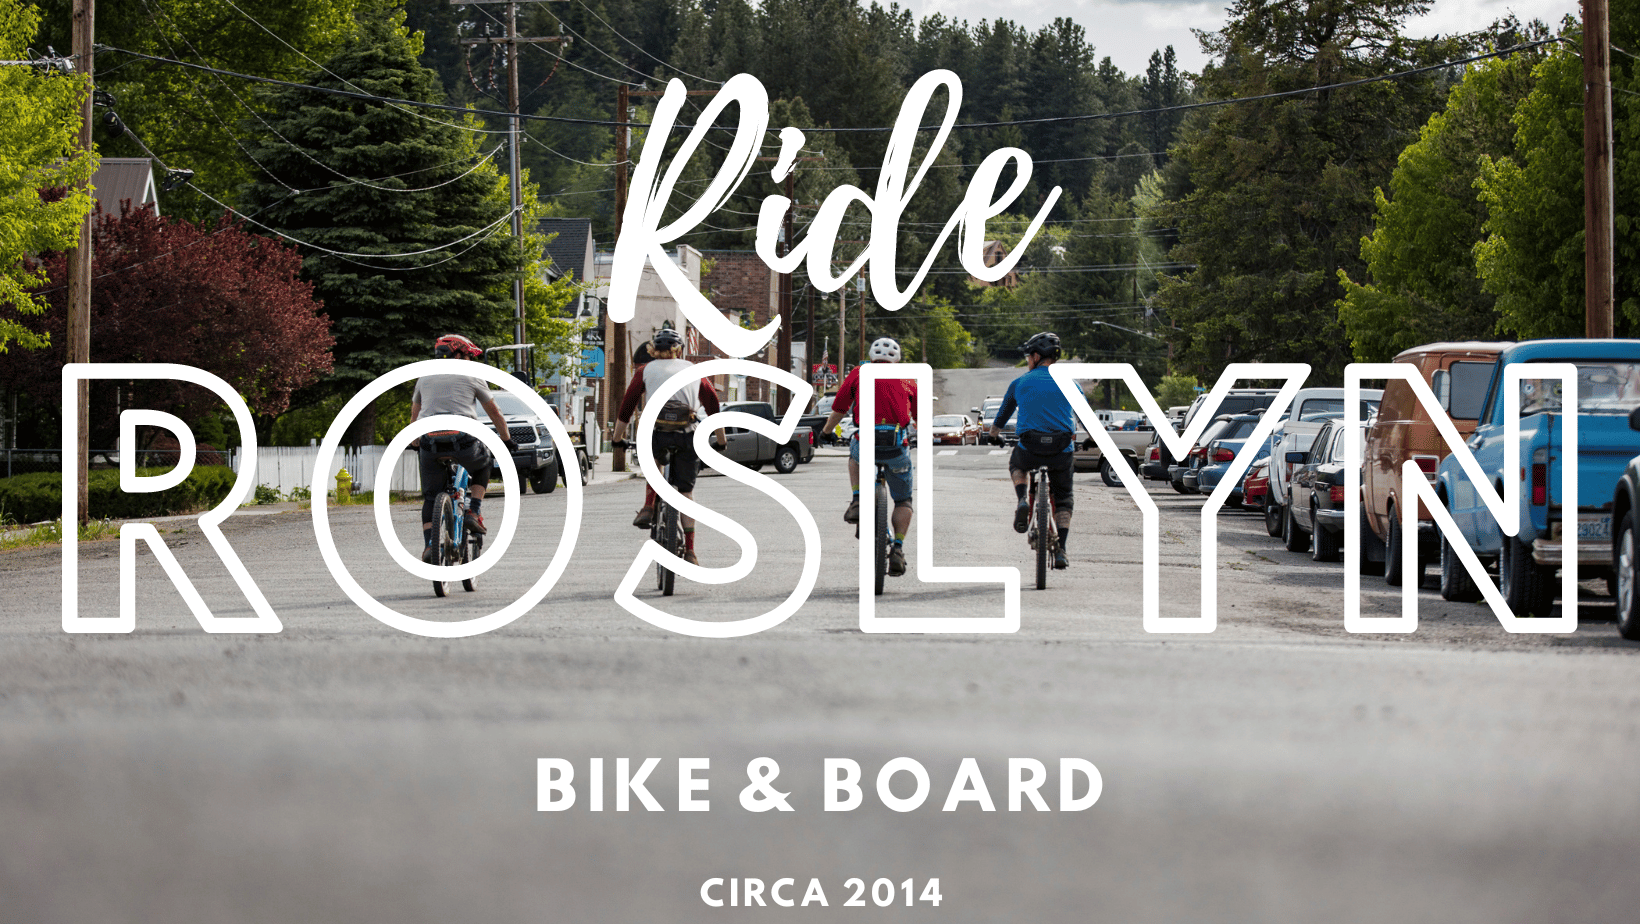 Ride Roslyn Bike & Board Circa 2014